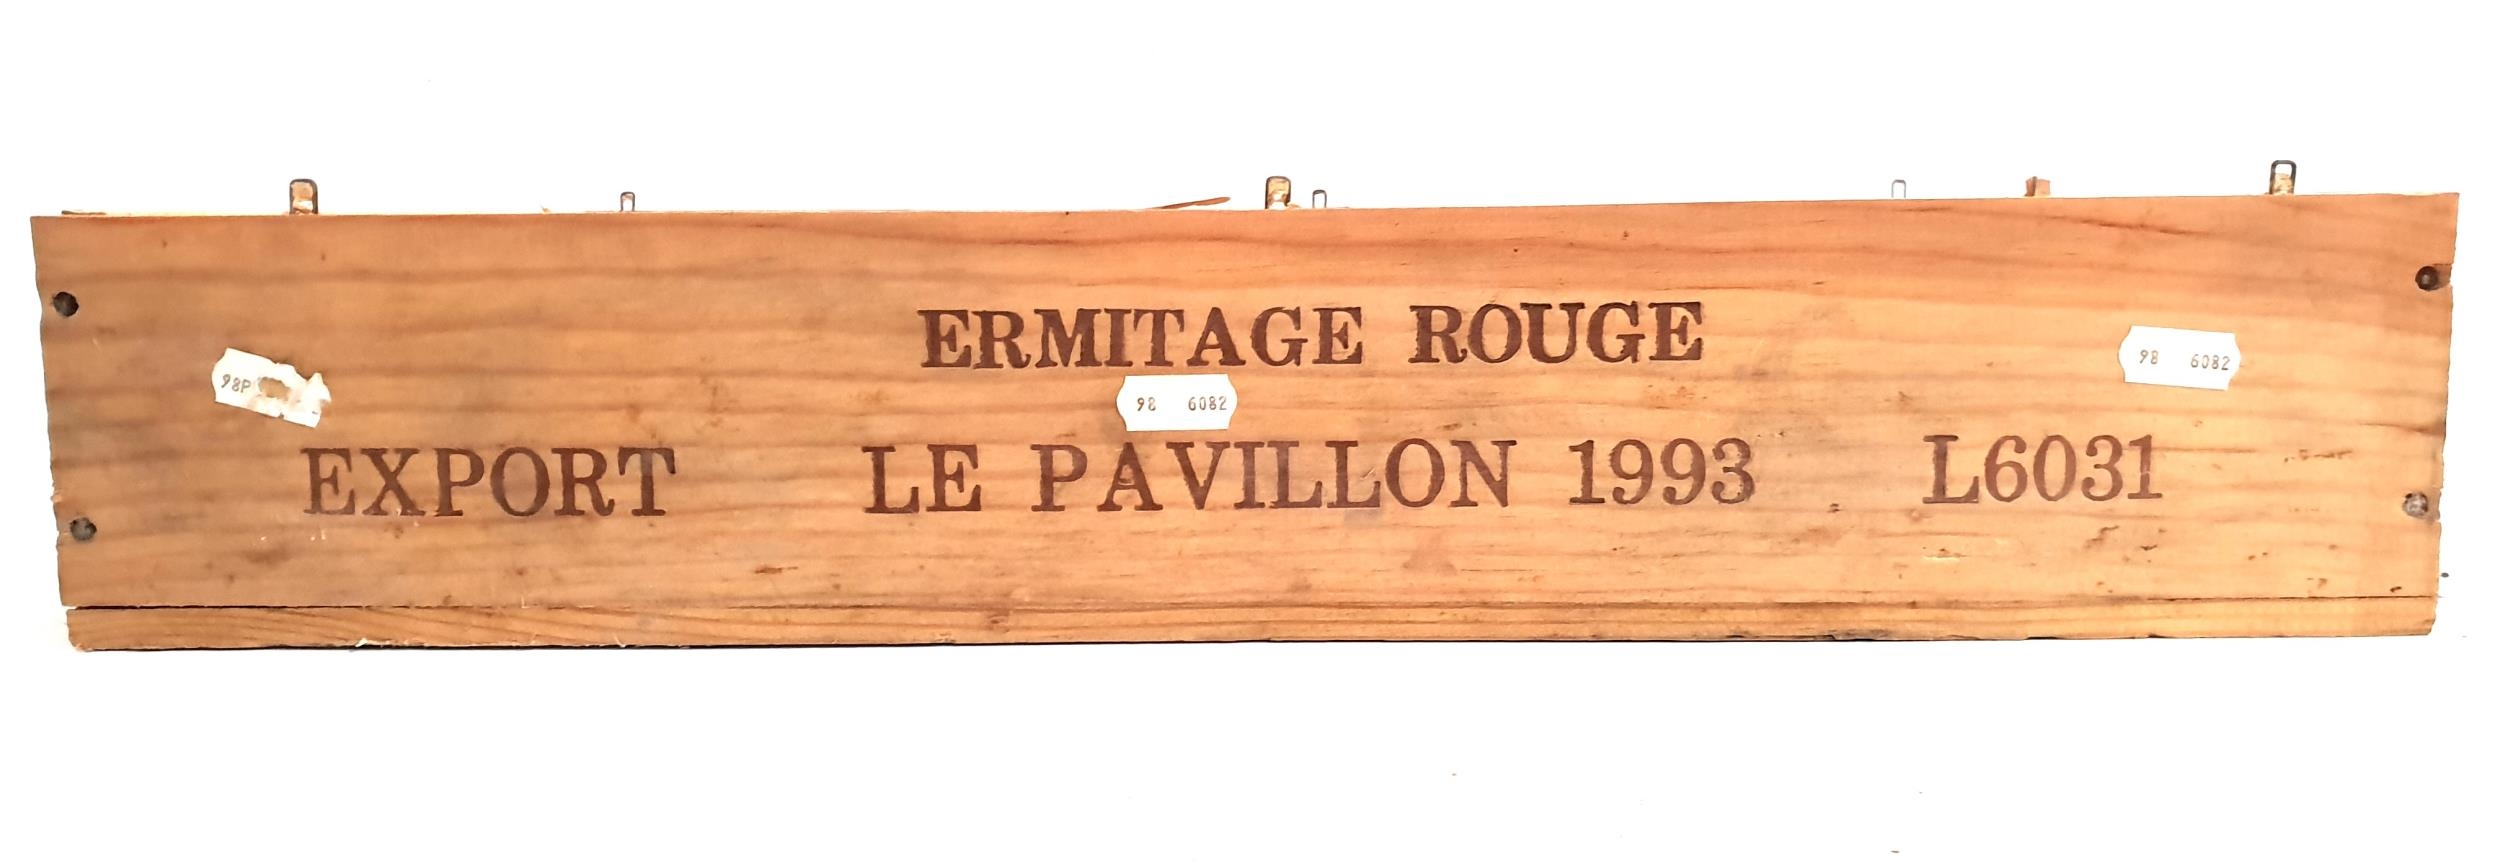 M. CHAPOUTIER LE PAVILLON ERMITAGE 1993 6 bottles, in original wooden case, 75cl and 13.5% - Image 2 of 3